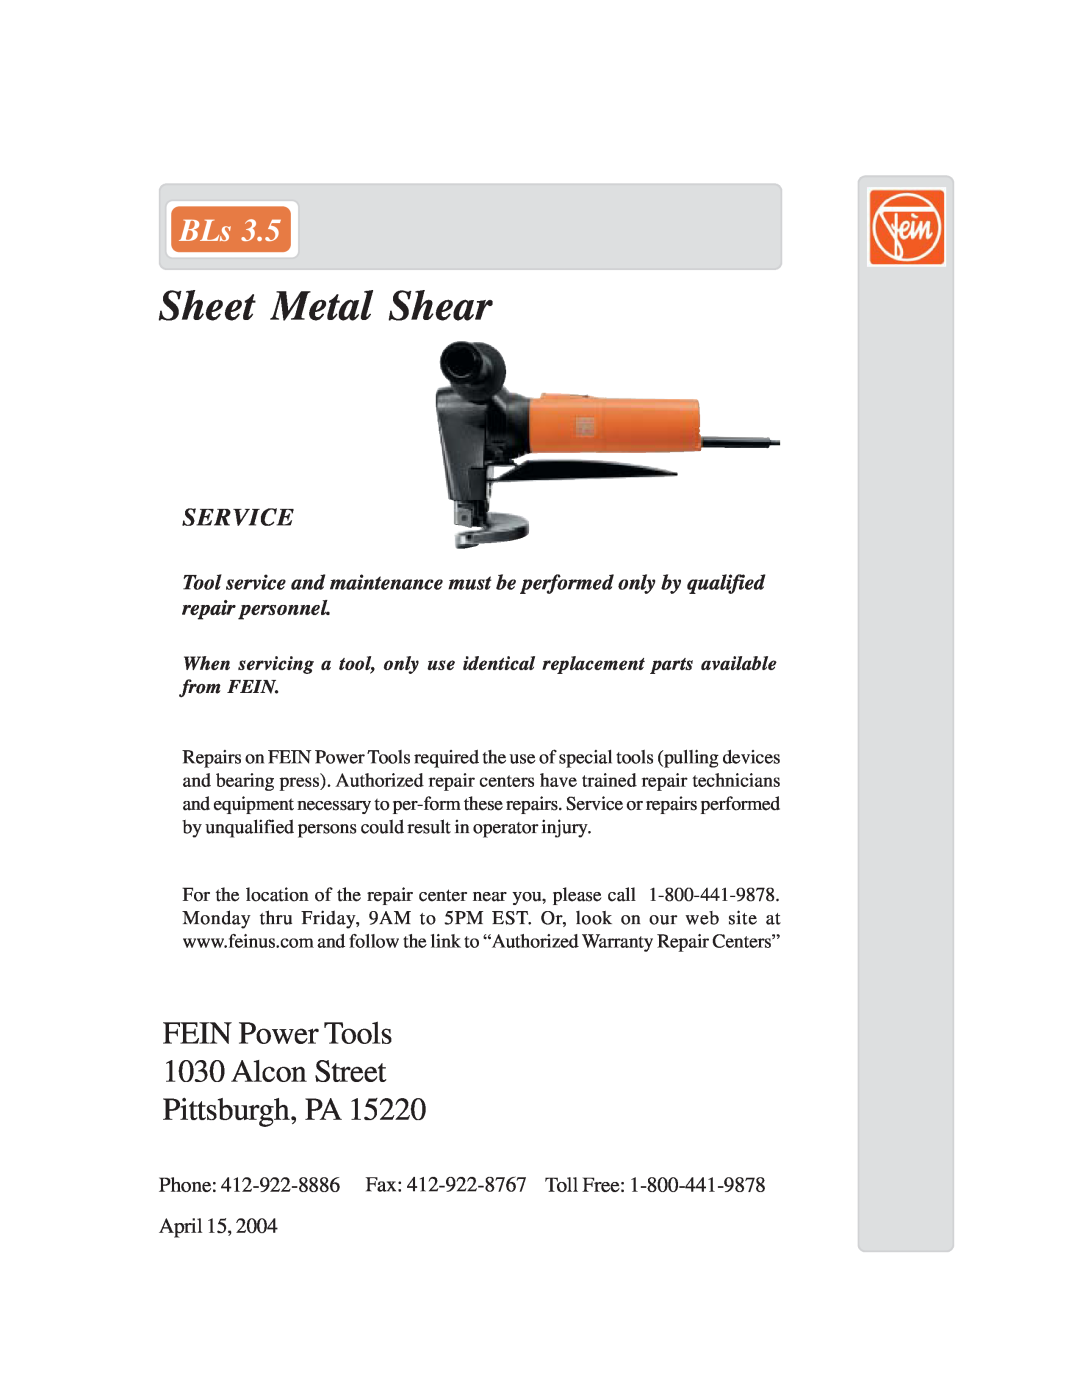 FEIN Power Tools BLs 3.5 warranty Sheet Metal Shear, FEIN Power Tools 1030 Alcon Street Pittsburgh, PA, Service, April 